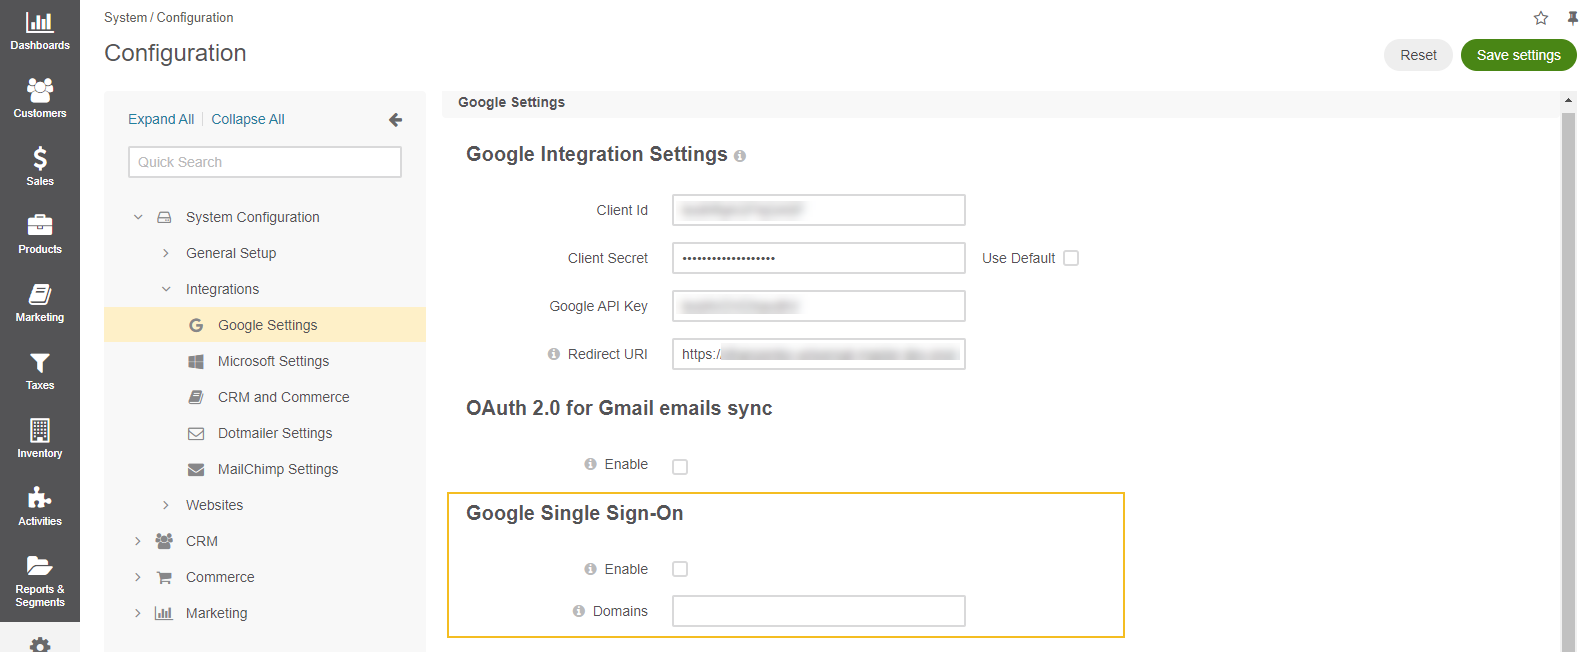 Global Google integration settings